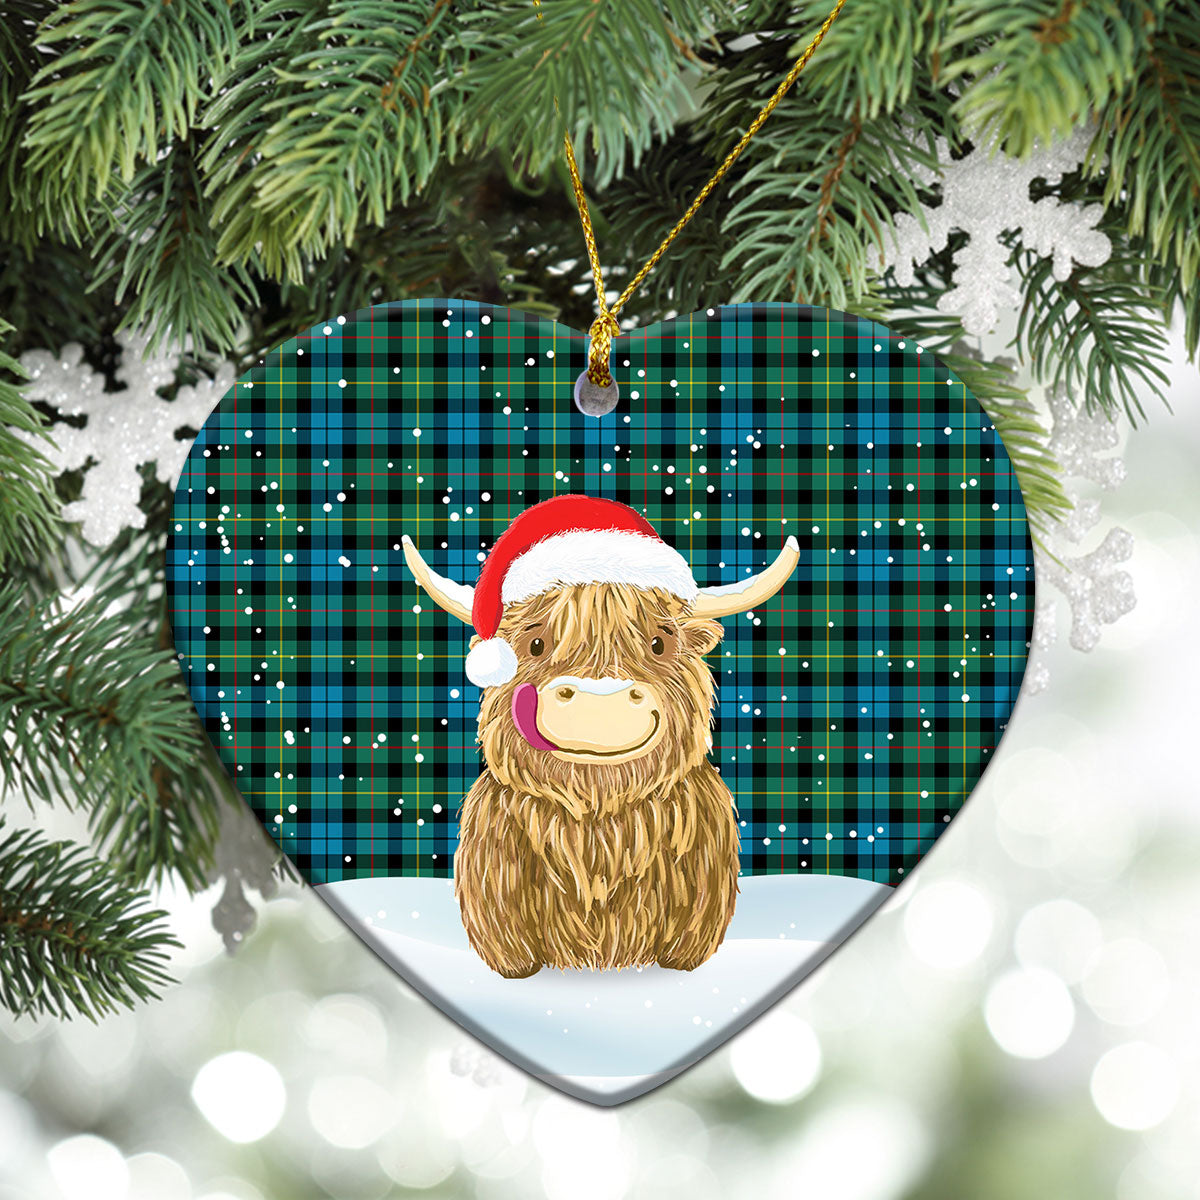 Rollo Ancient Tartan Christmas Ceramic Ornament - Highland Cows Style